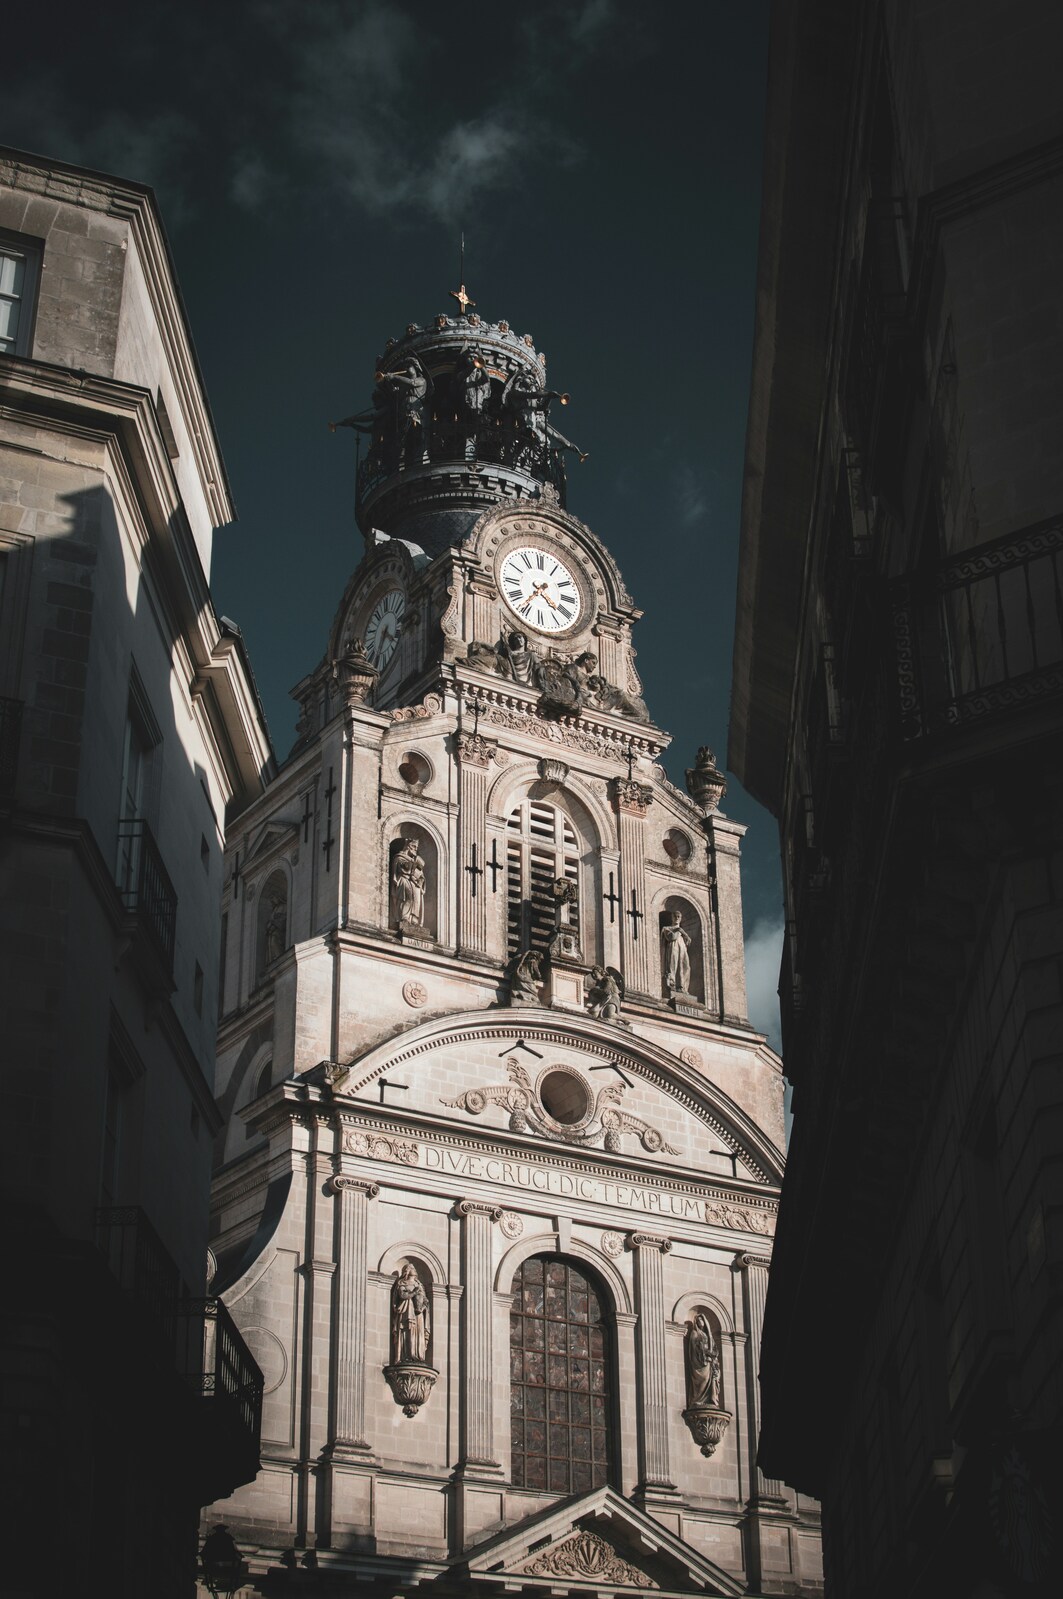 Image of Église Sainte Croix, Nantes by Team PhotoHound